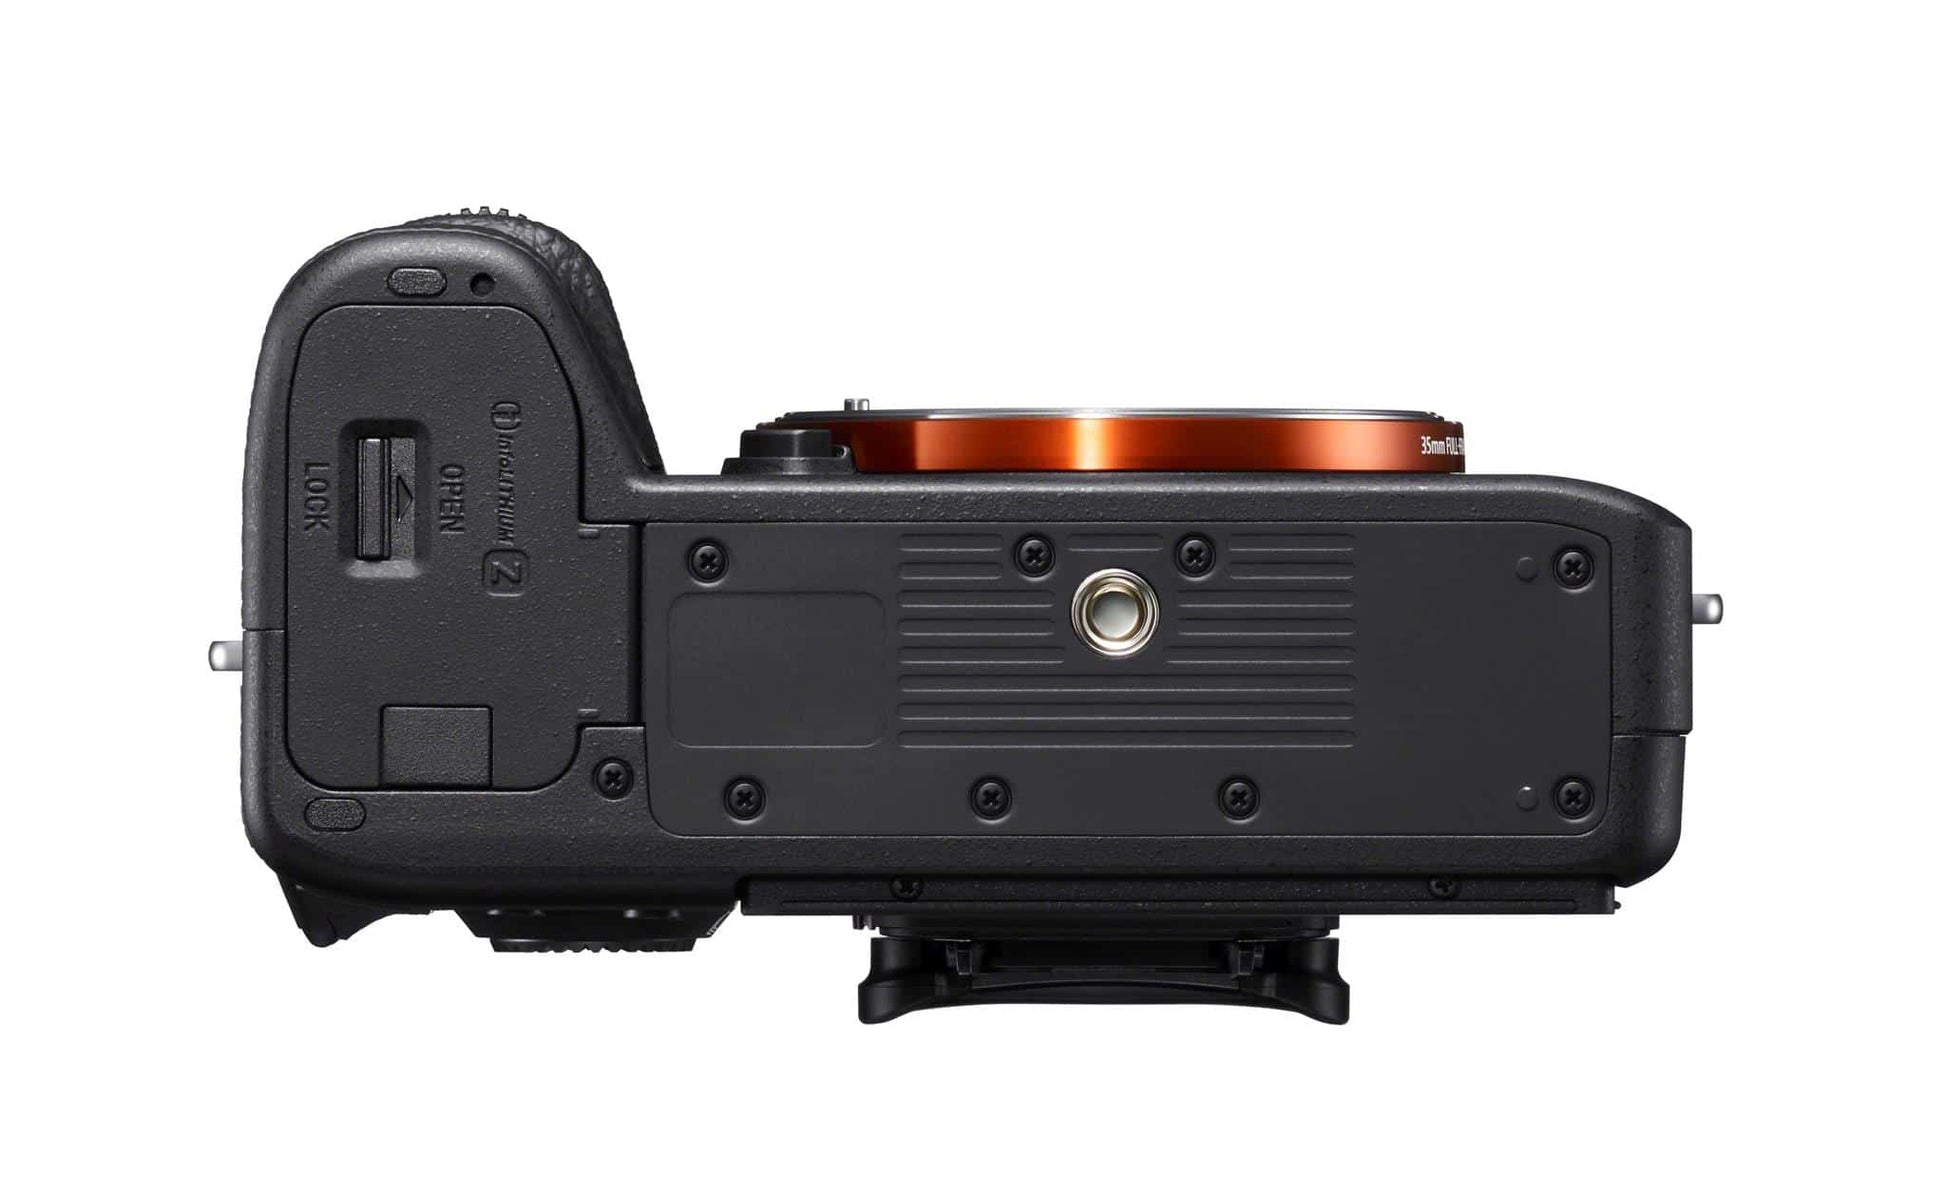 Sony A7 Mark III, FE 28-70mm F/3.5-5.6 OSS Lens.